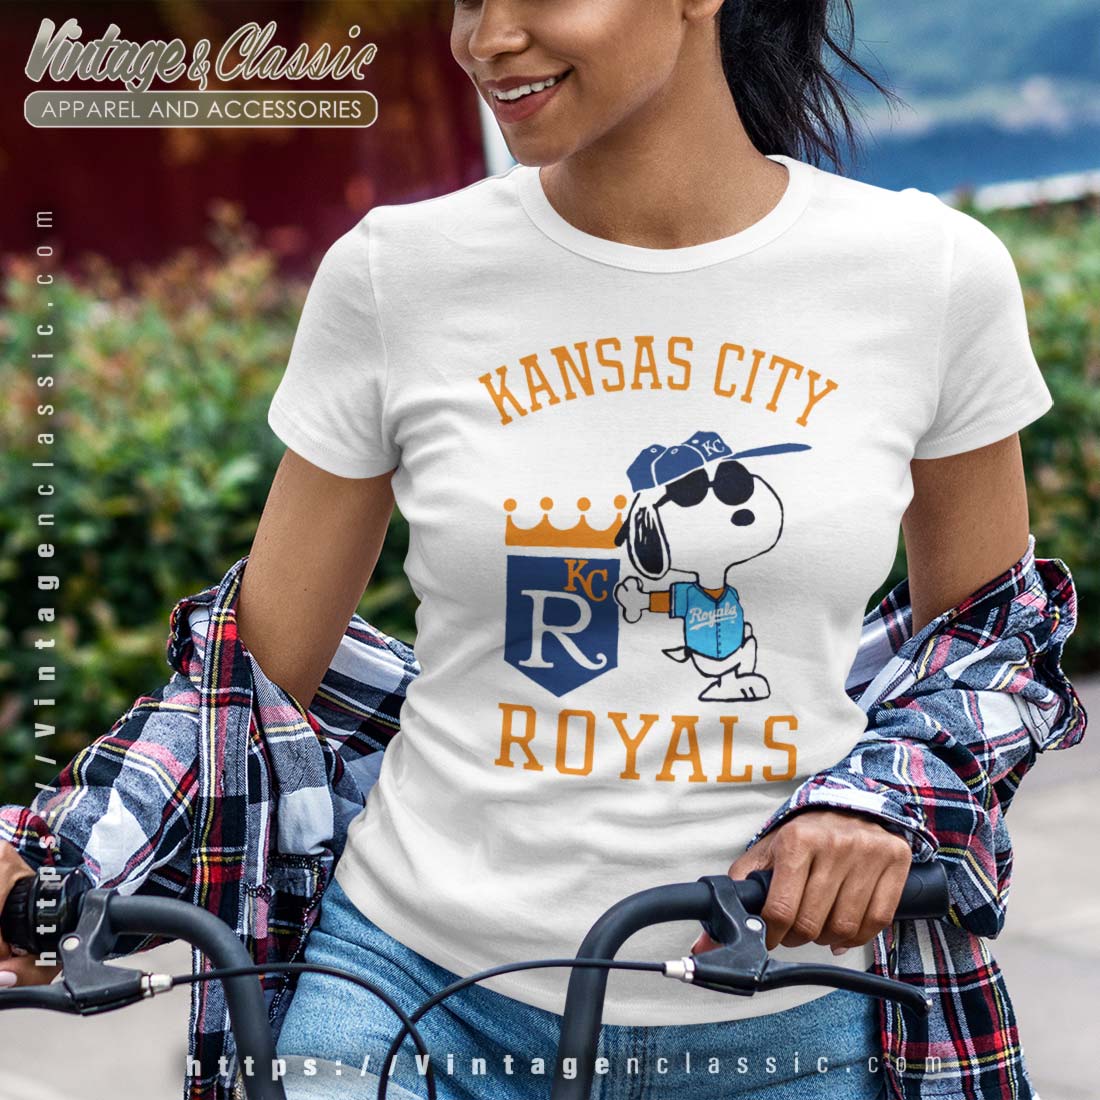 Kansas City Royals Gear & Apparel